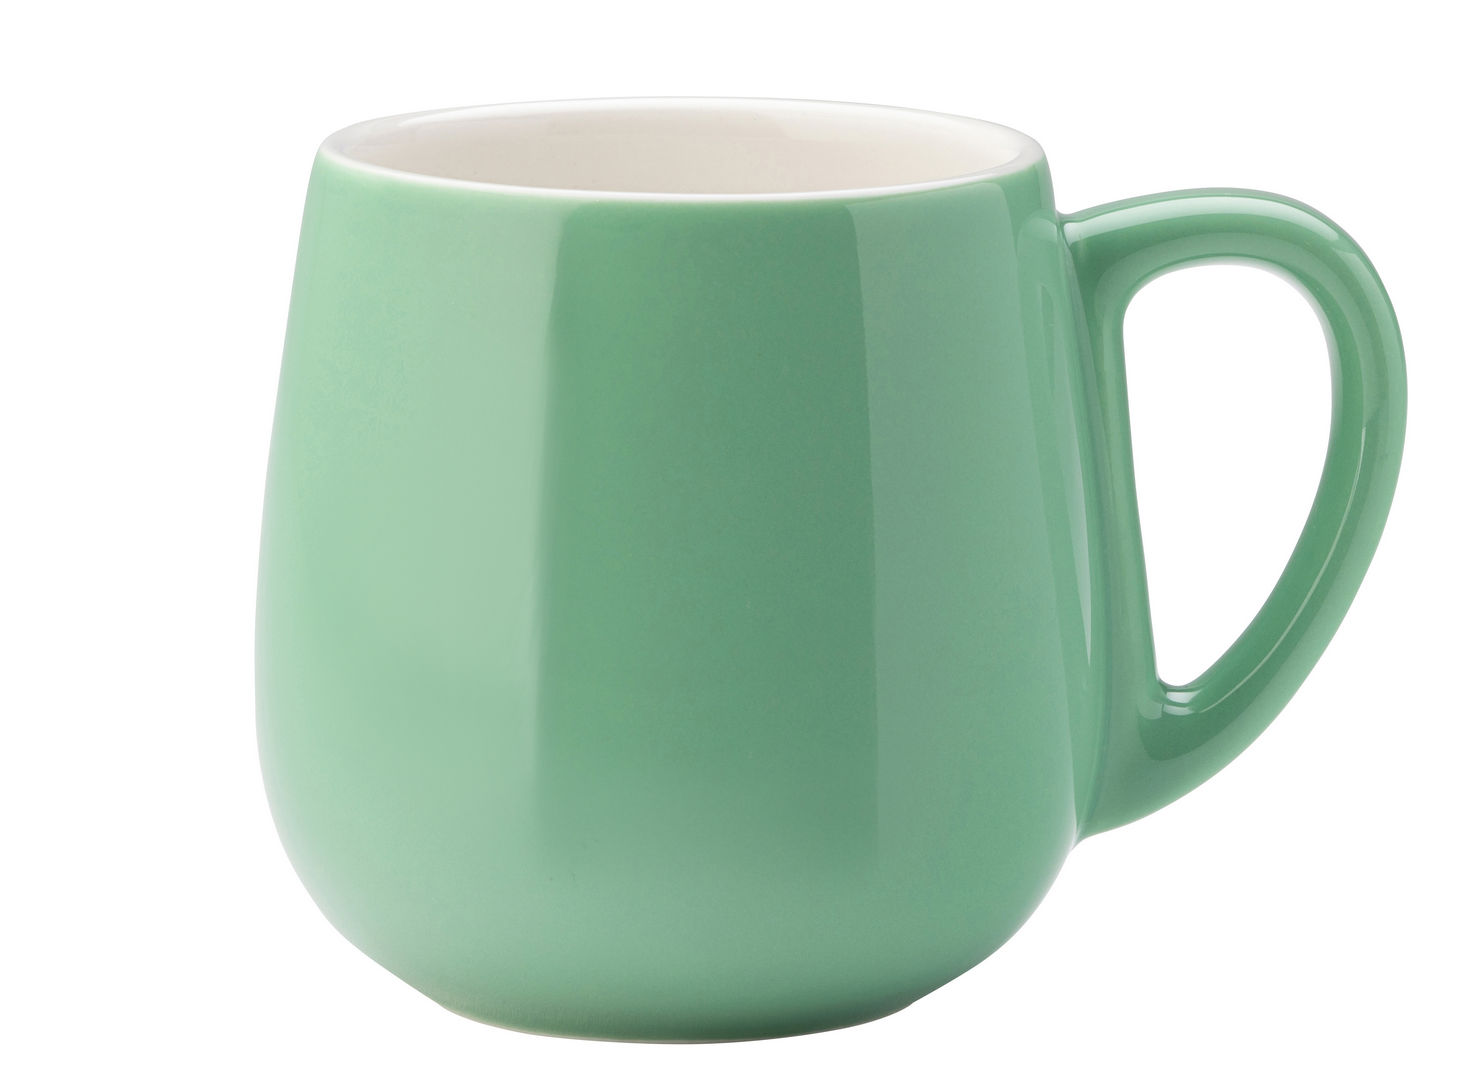 Barista Green Mug 15oz (42cl) - CT9020-000000-B01006 (Pack of 6)